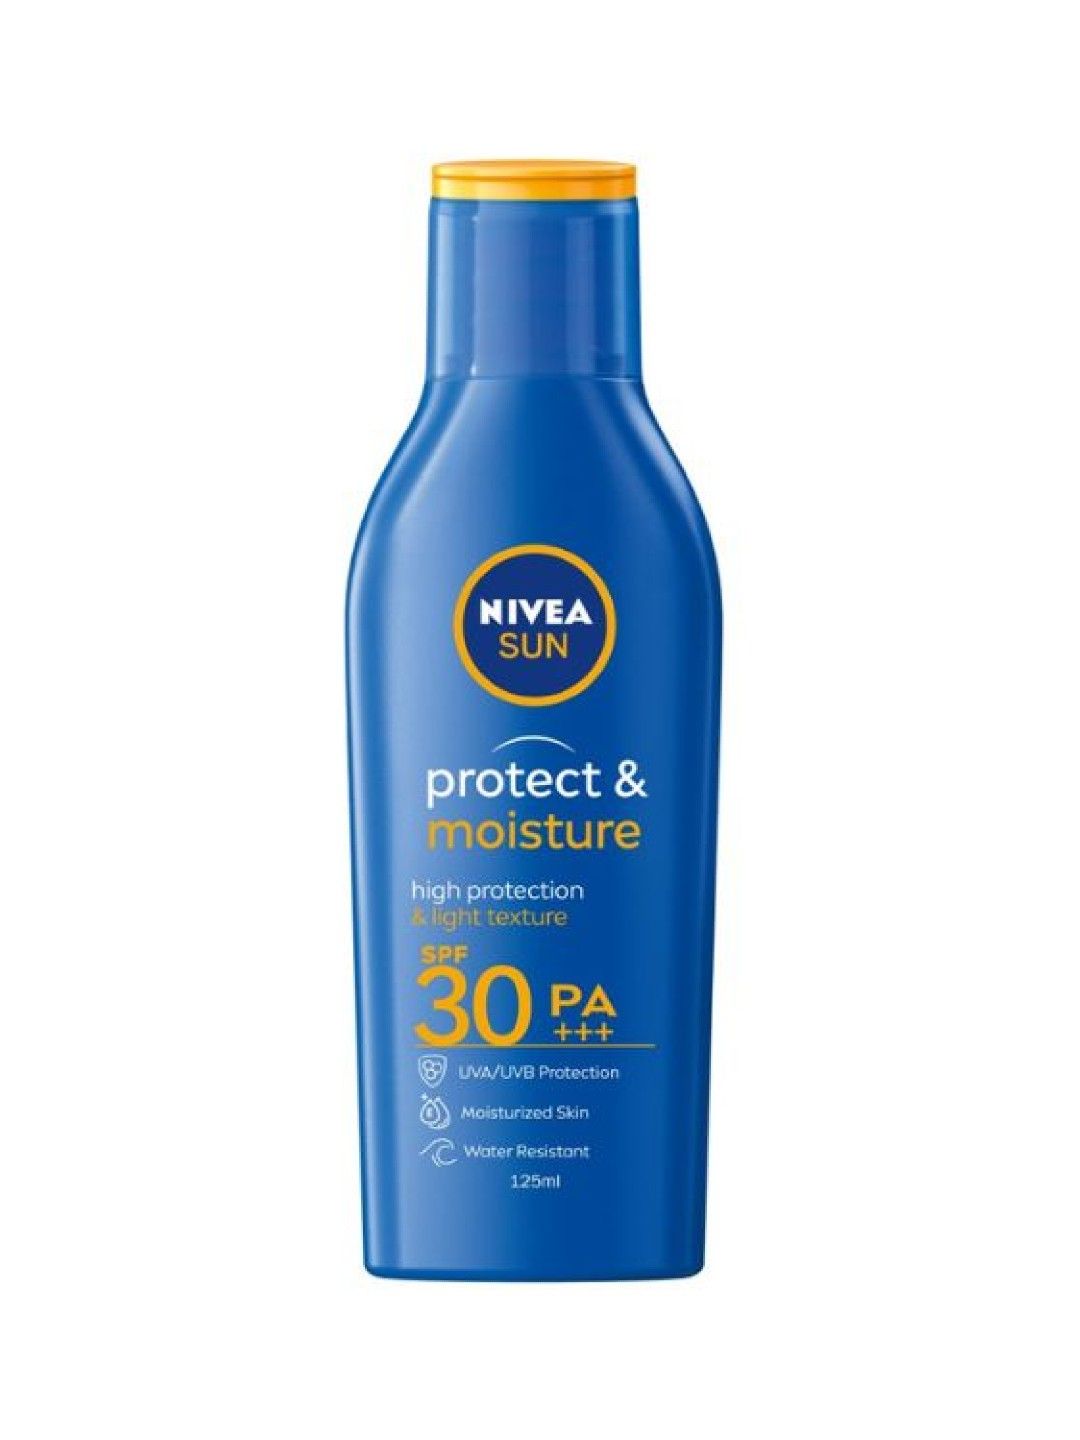 NIVEA Sun Protect & Moisture Sunscreen Lotion w/ SPF 30, 125ml